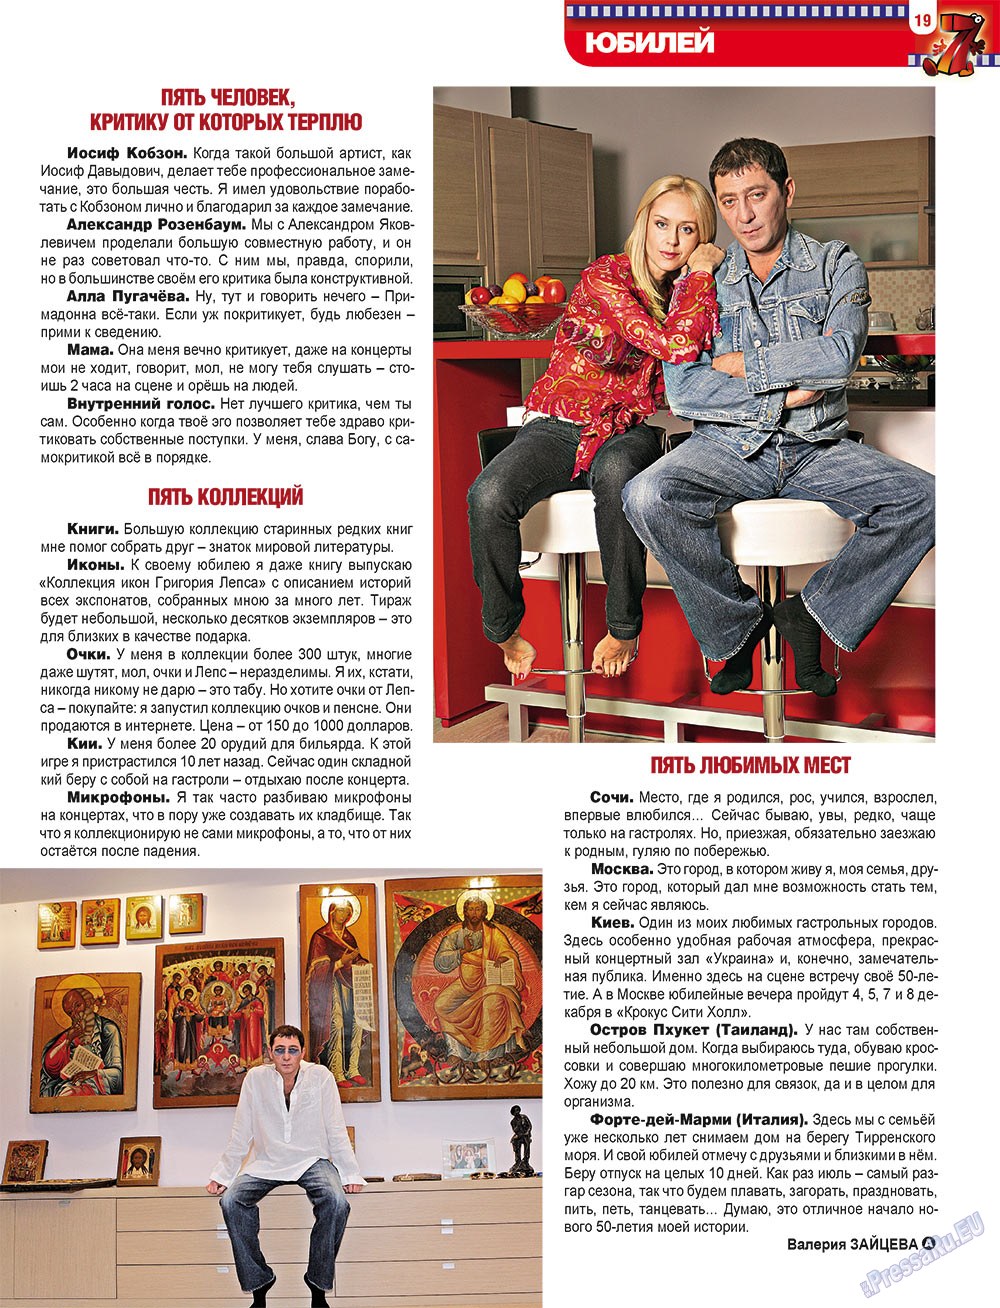 7плюс7я (журнал). 2012 год, номер 30, стр. 19